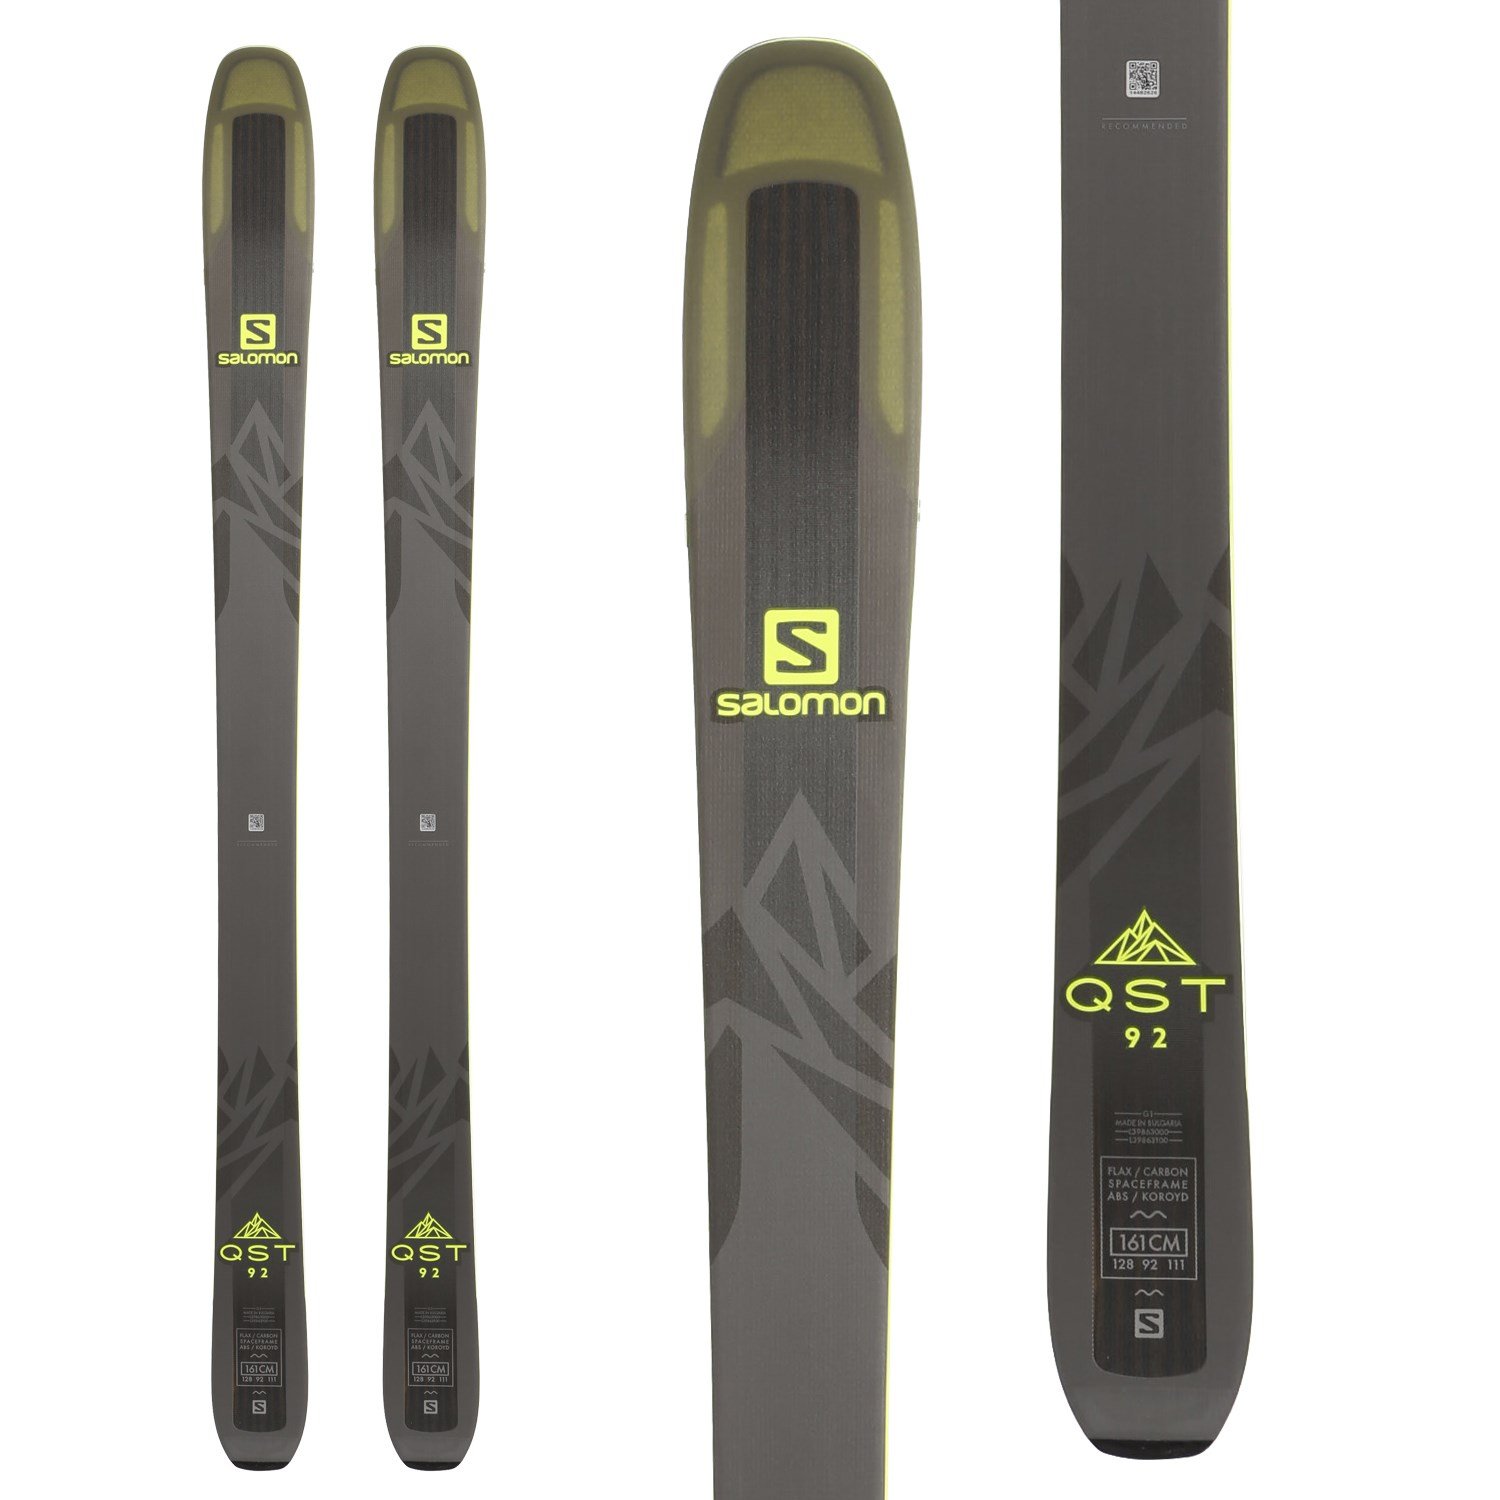 161cm Salomon N QST 92 Men's Advanced All-Mountain Rockered Ski New 2019 